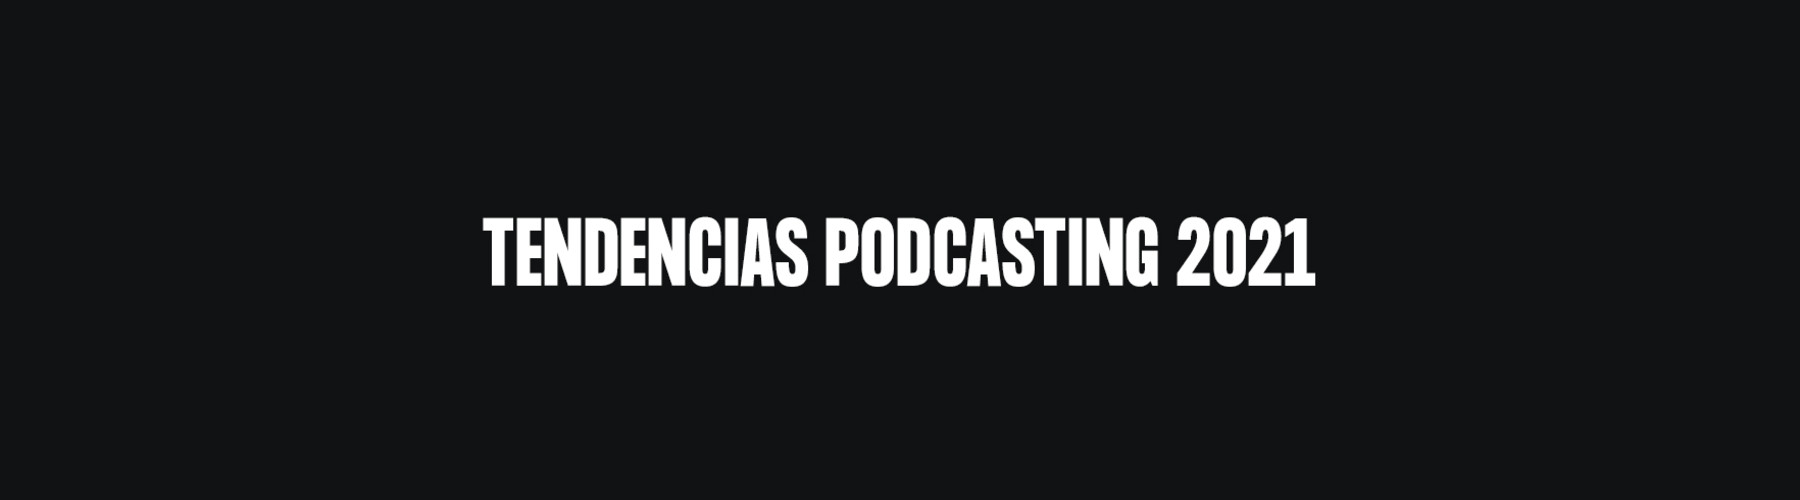 Mesa Tendencias podcasting 2021